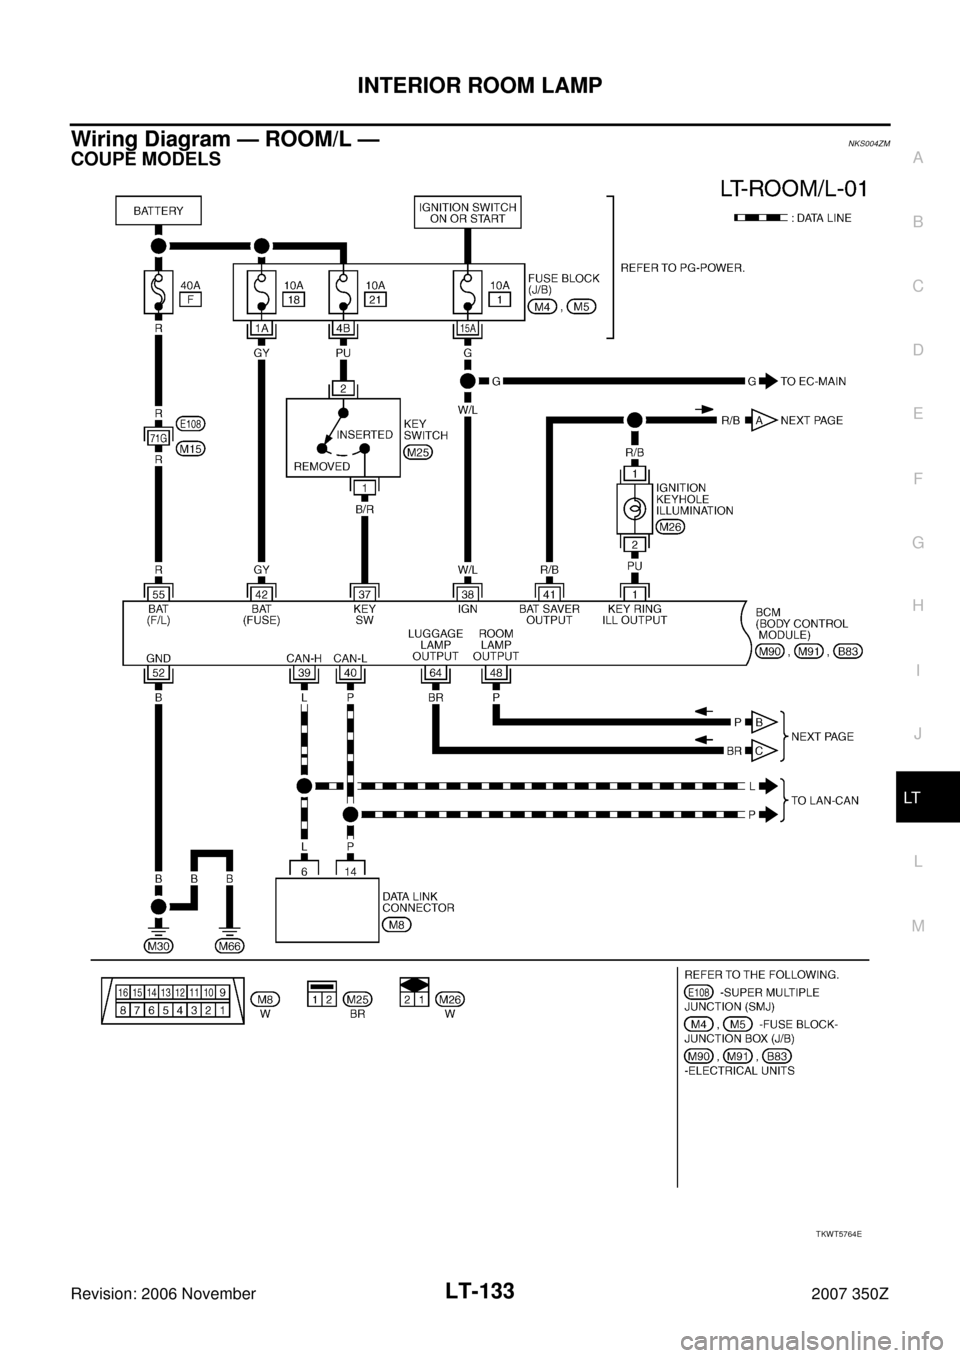 NISSAN 350Z 2007 Z33 Lighting System Workshop Manual INTERIOR ROOM LAMP
LT-133
C
D
E
F
G
H
I
J
L
MA
B
LT
Revision: 2006 November2007 350Z
Wiring Diagram — ROOM/L —NKS004ZM
COUPE MODELS
TKWT5764E 